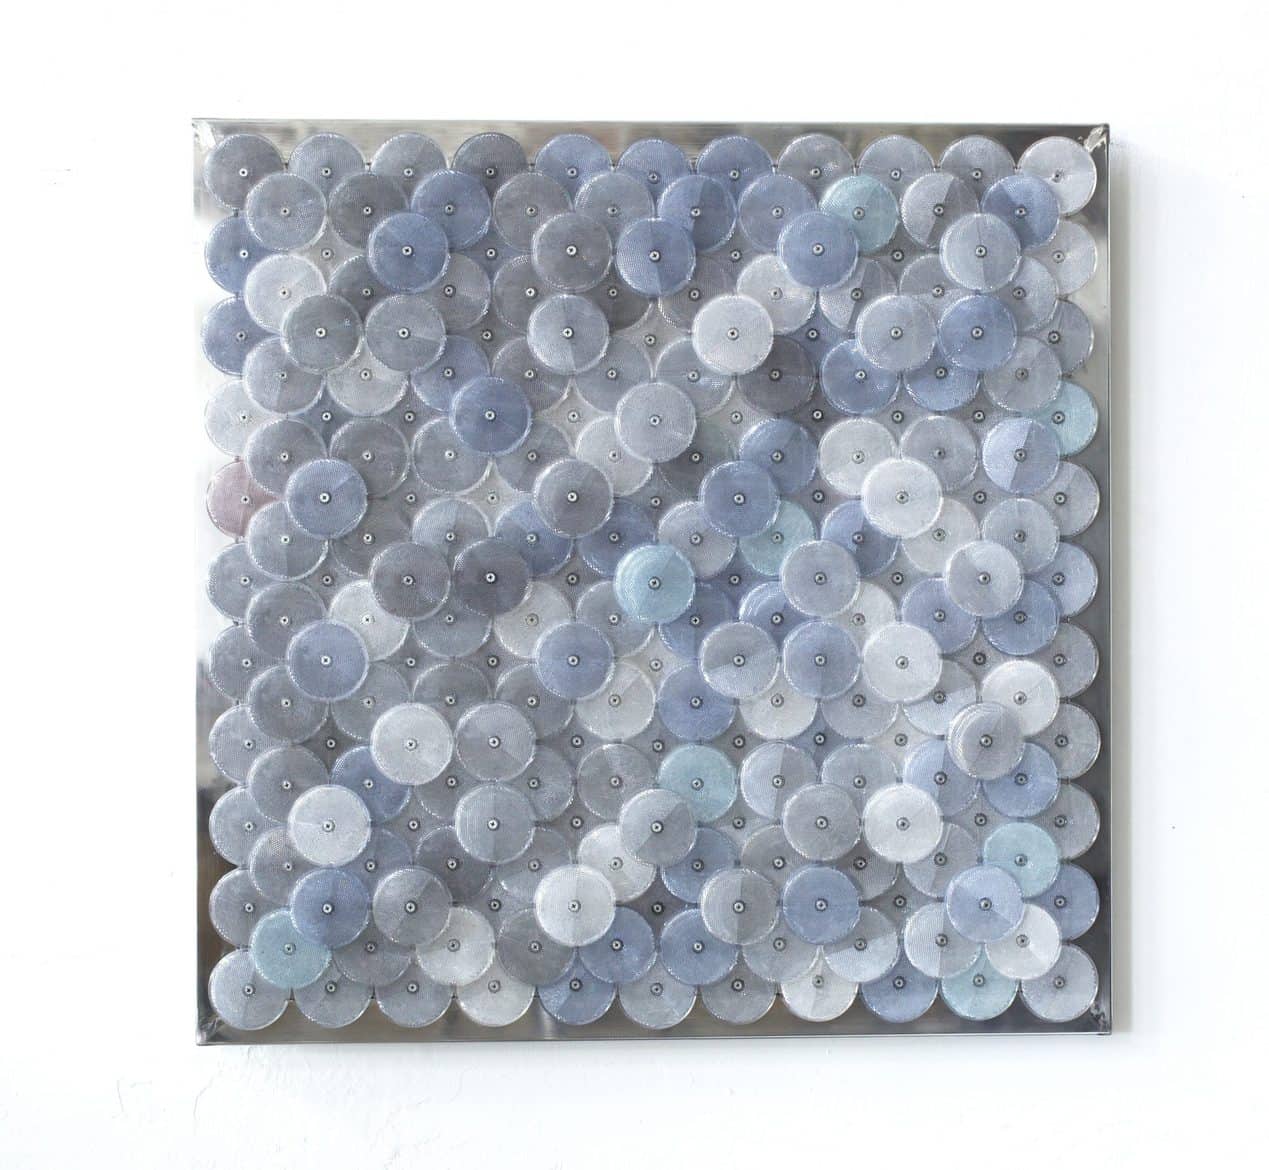 'Dust (grey)', 2019, customised corner reflectors, polished aluminium, 97 x 97 cm